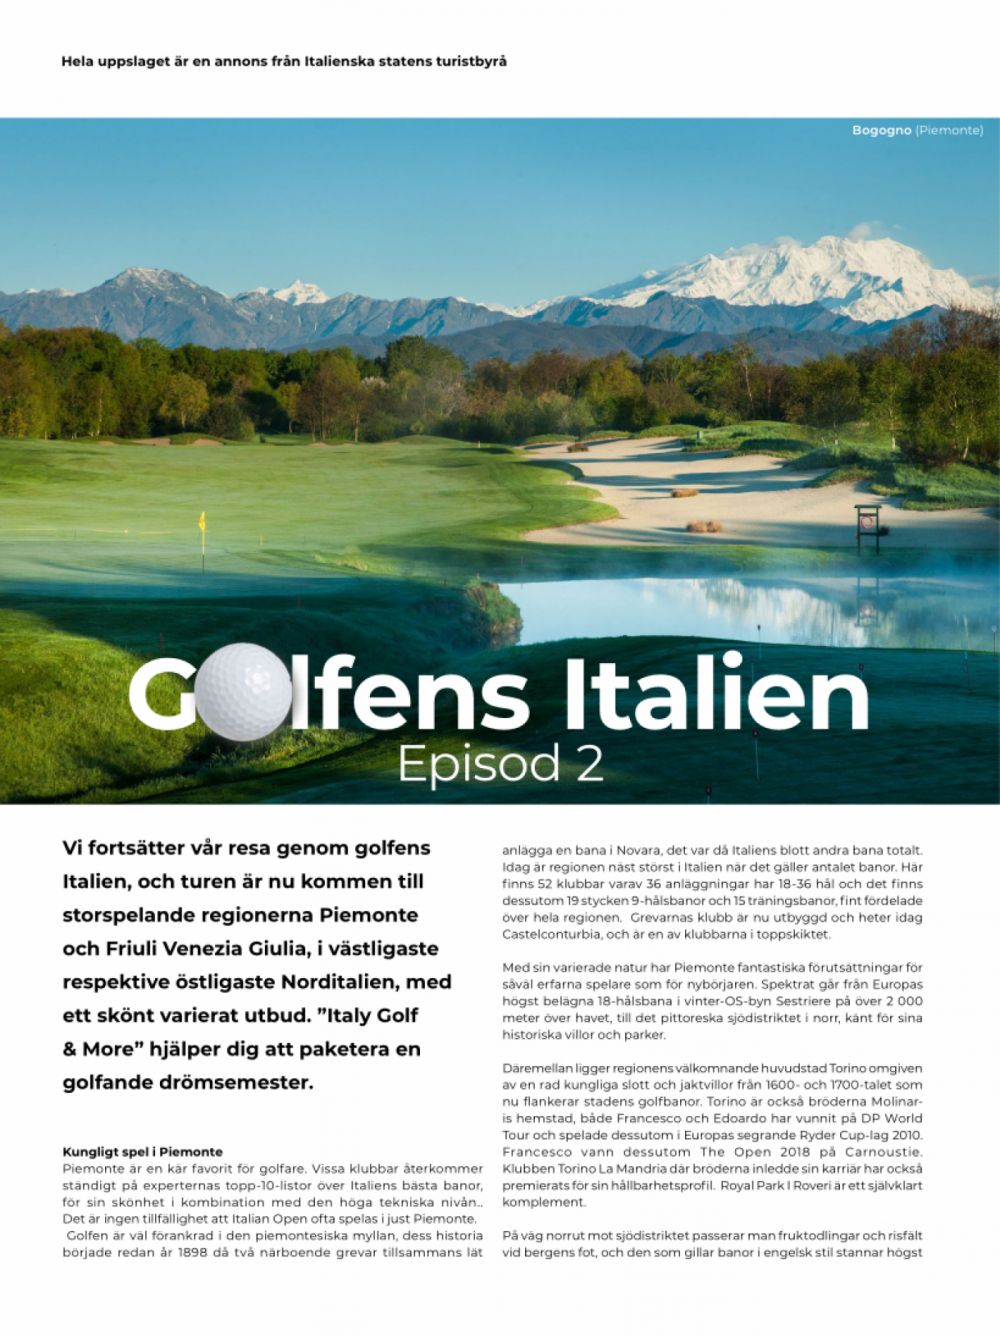 Discover Golf in Italy - Piedmont and Friuli-Venezia Giulia - Stockholm